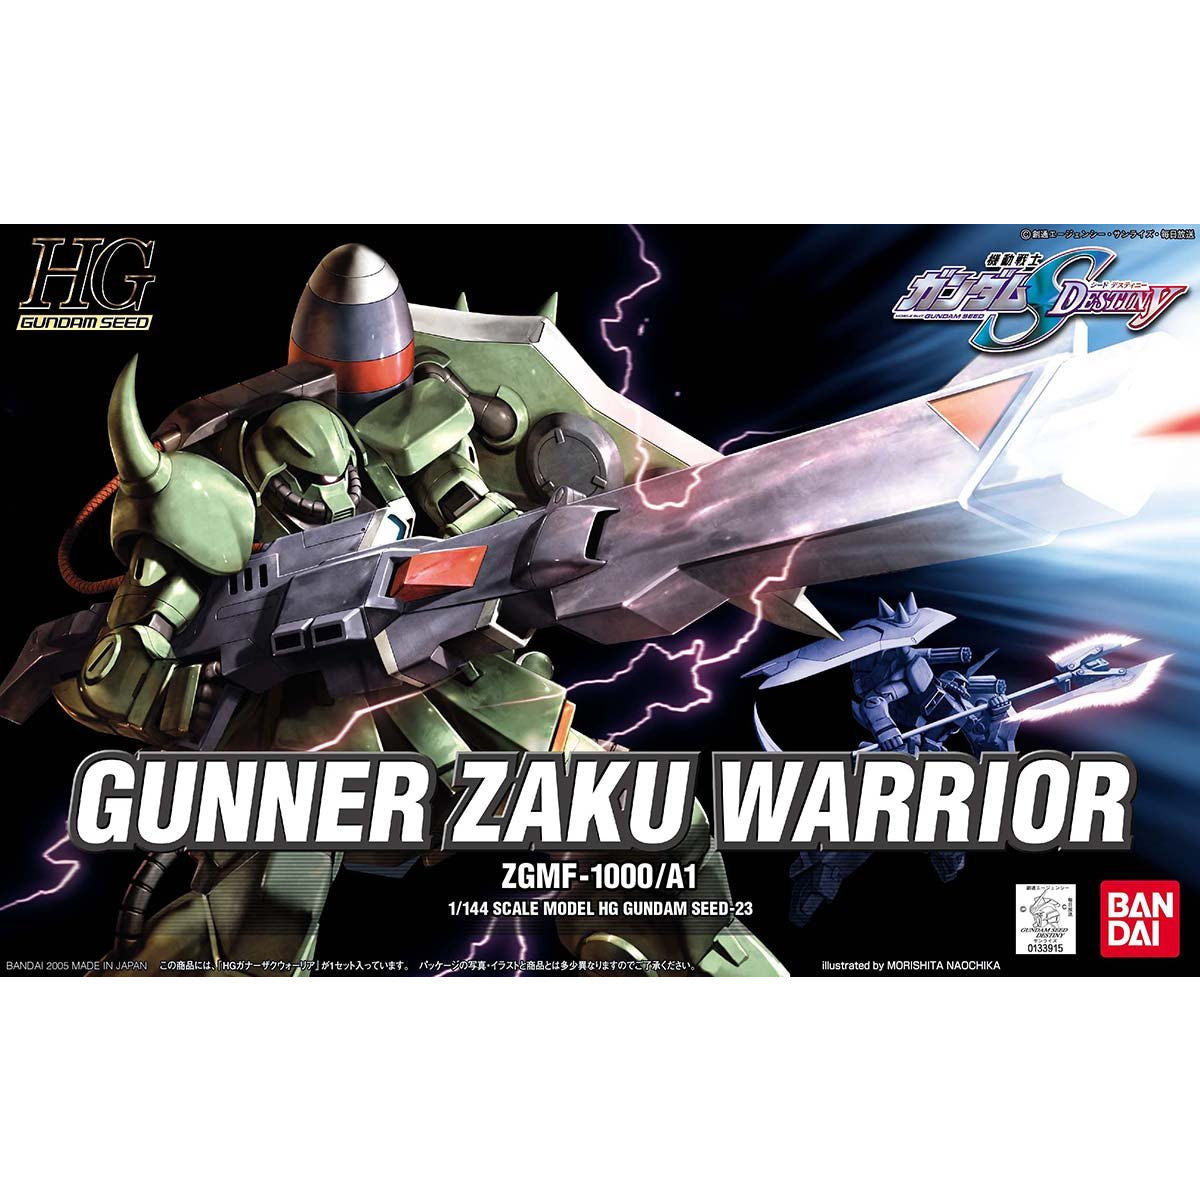 HG Gunner Zaku Warrior 1/144